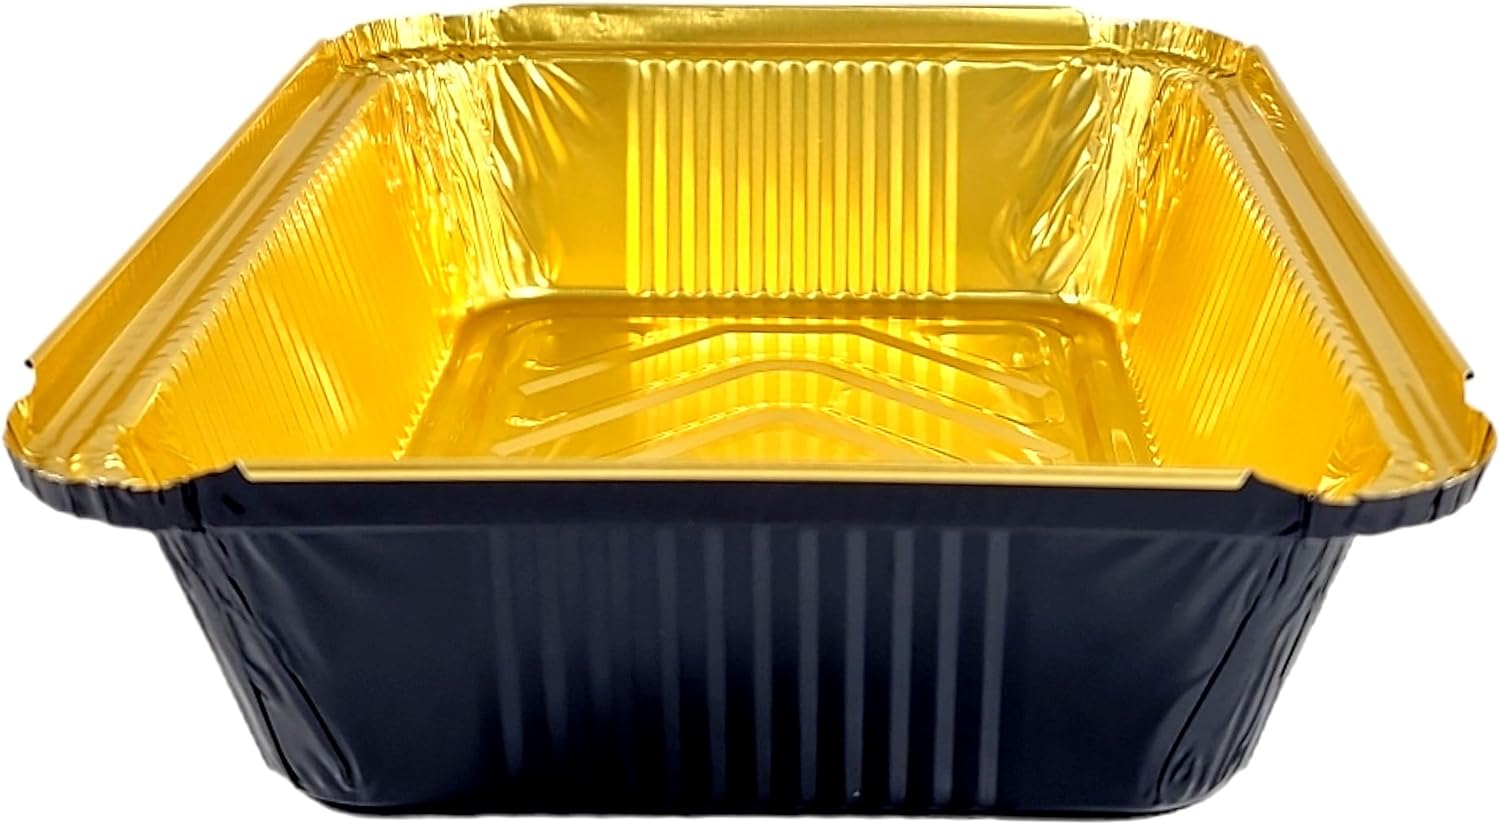 2 1/4 lb. Oblong Black & Gold Aluminum Foil Pans Take Out Heavy Duty Containers W/Clear Dome Lids 500/CS